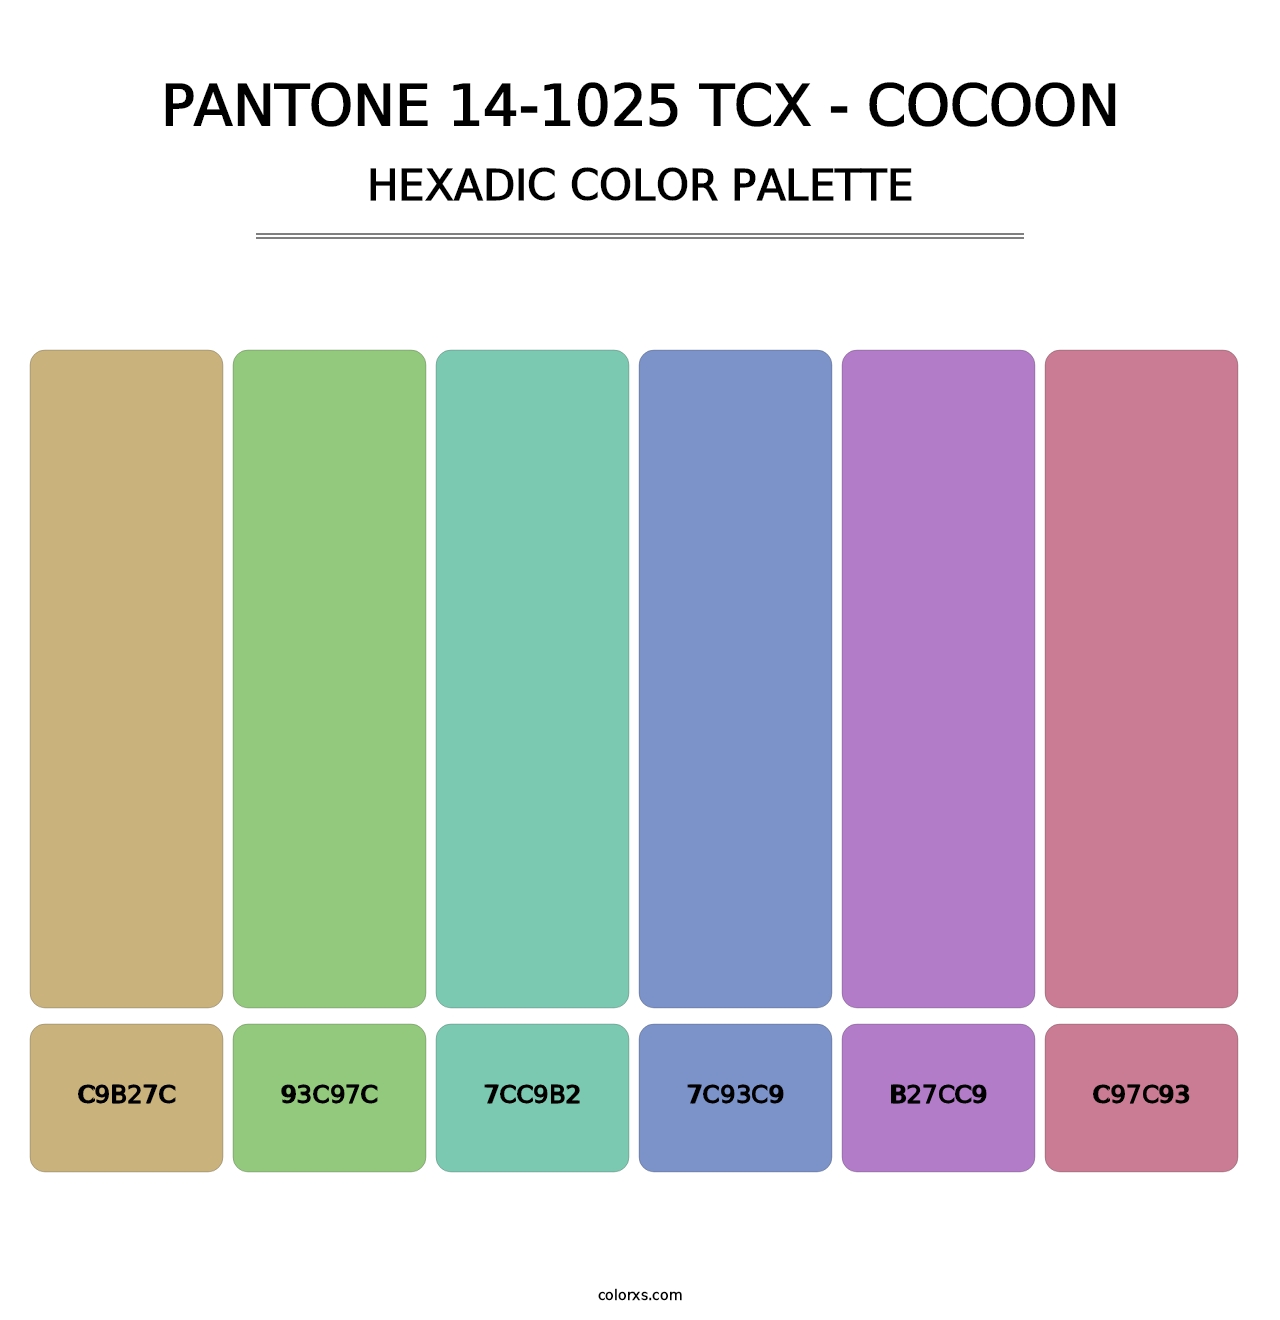 PANTONE 14-1025 TCX - Cocoon - Hexadic Color Palette